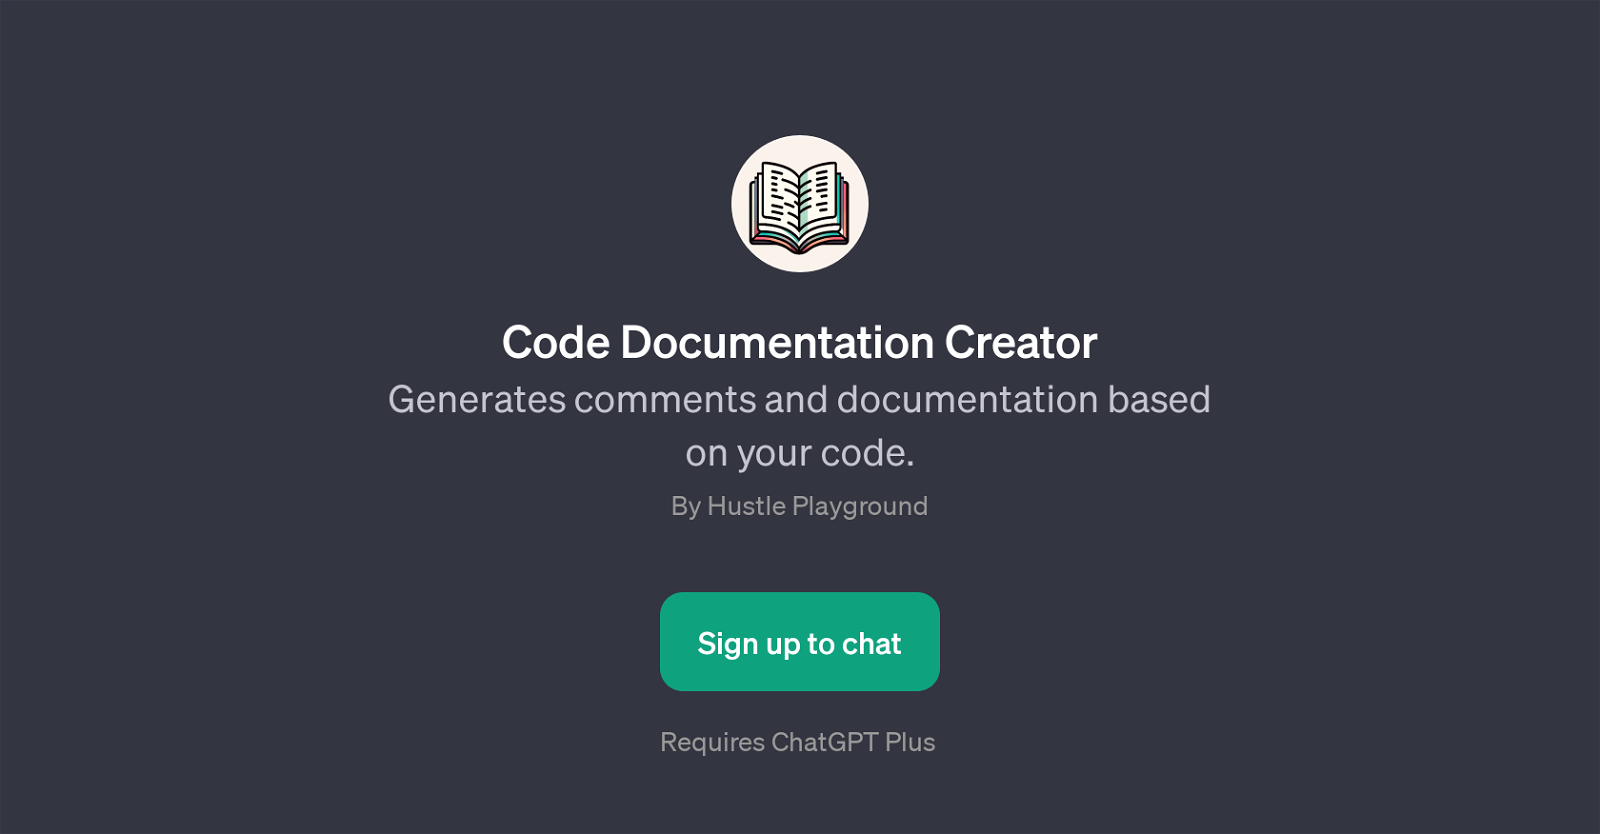 Code Documentation Creator website